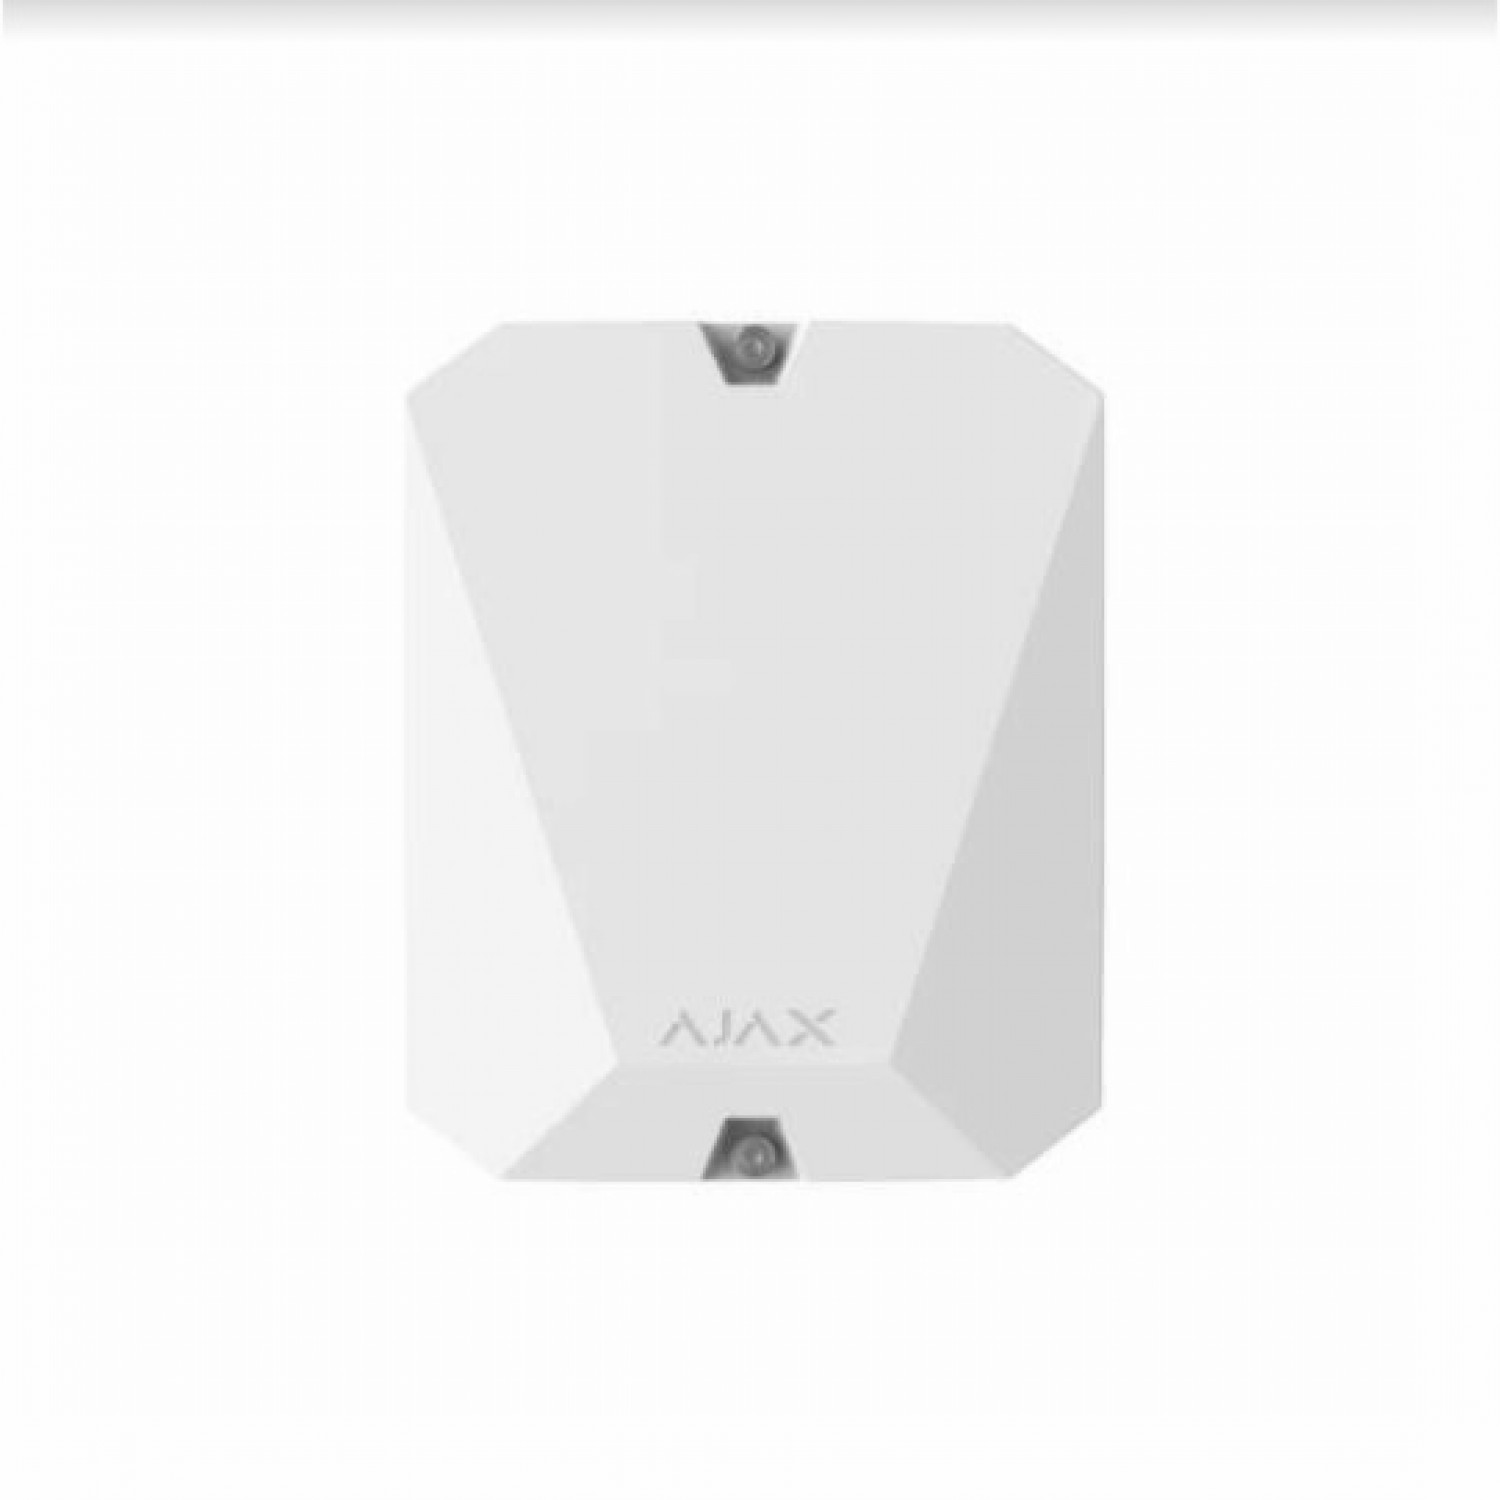 alt_image Компонент Ajax 10813 MultiTransmitter white EU трансмиттер 18789